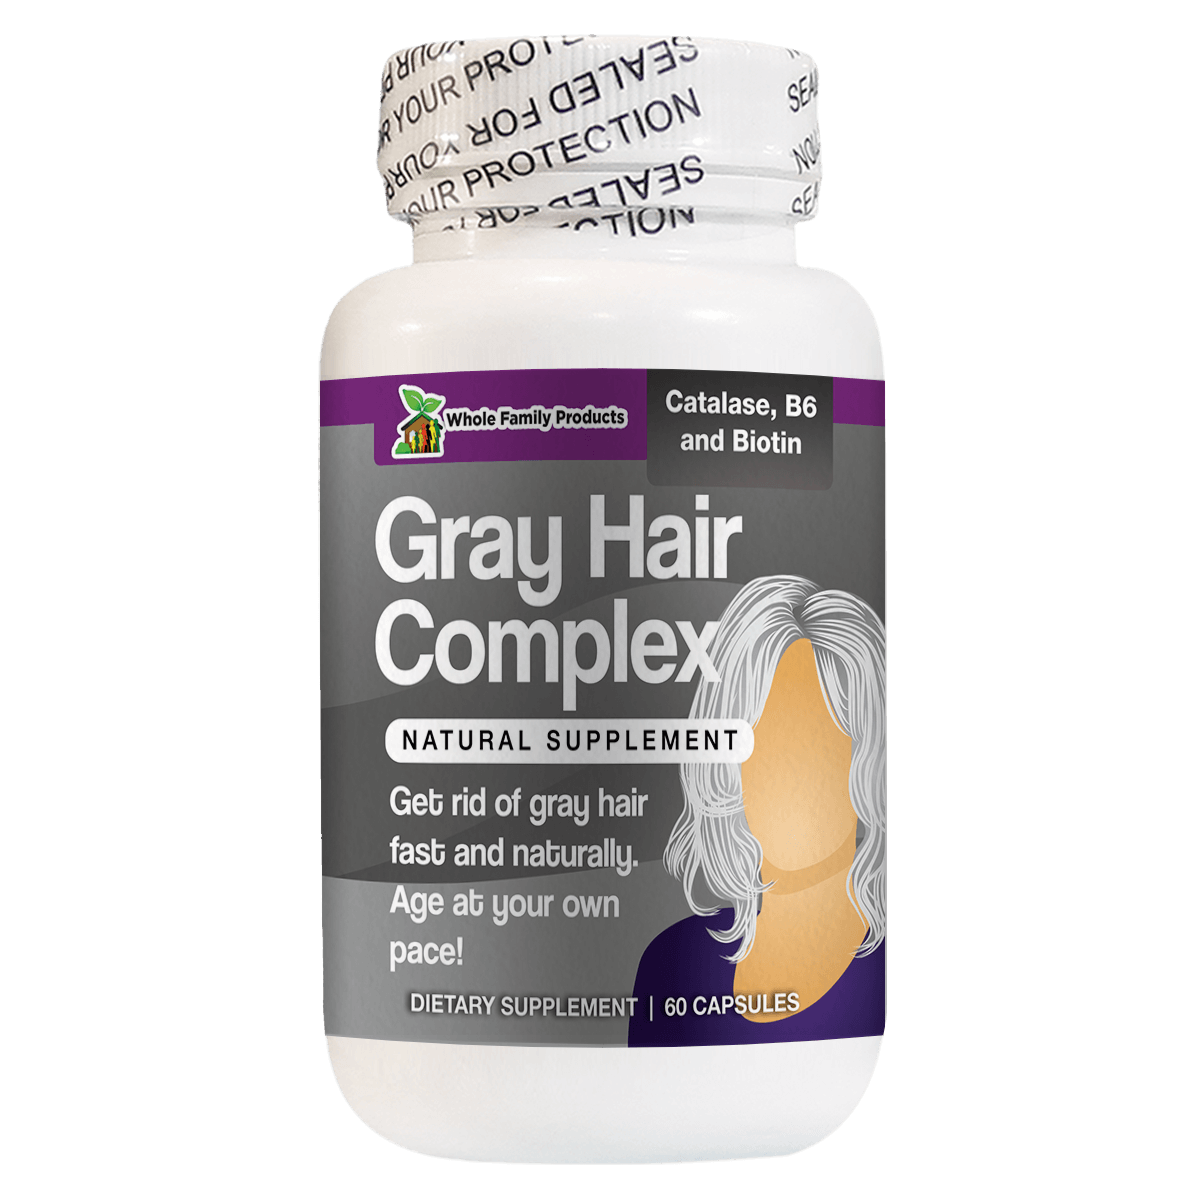 For Gray Hair